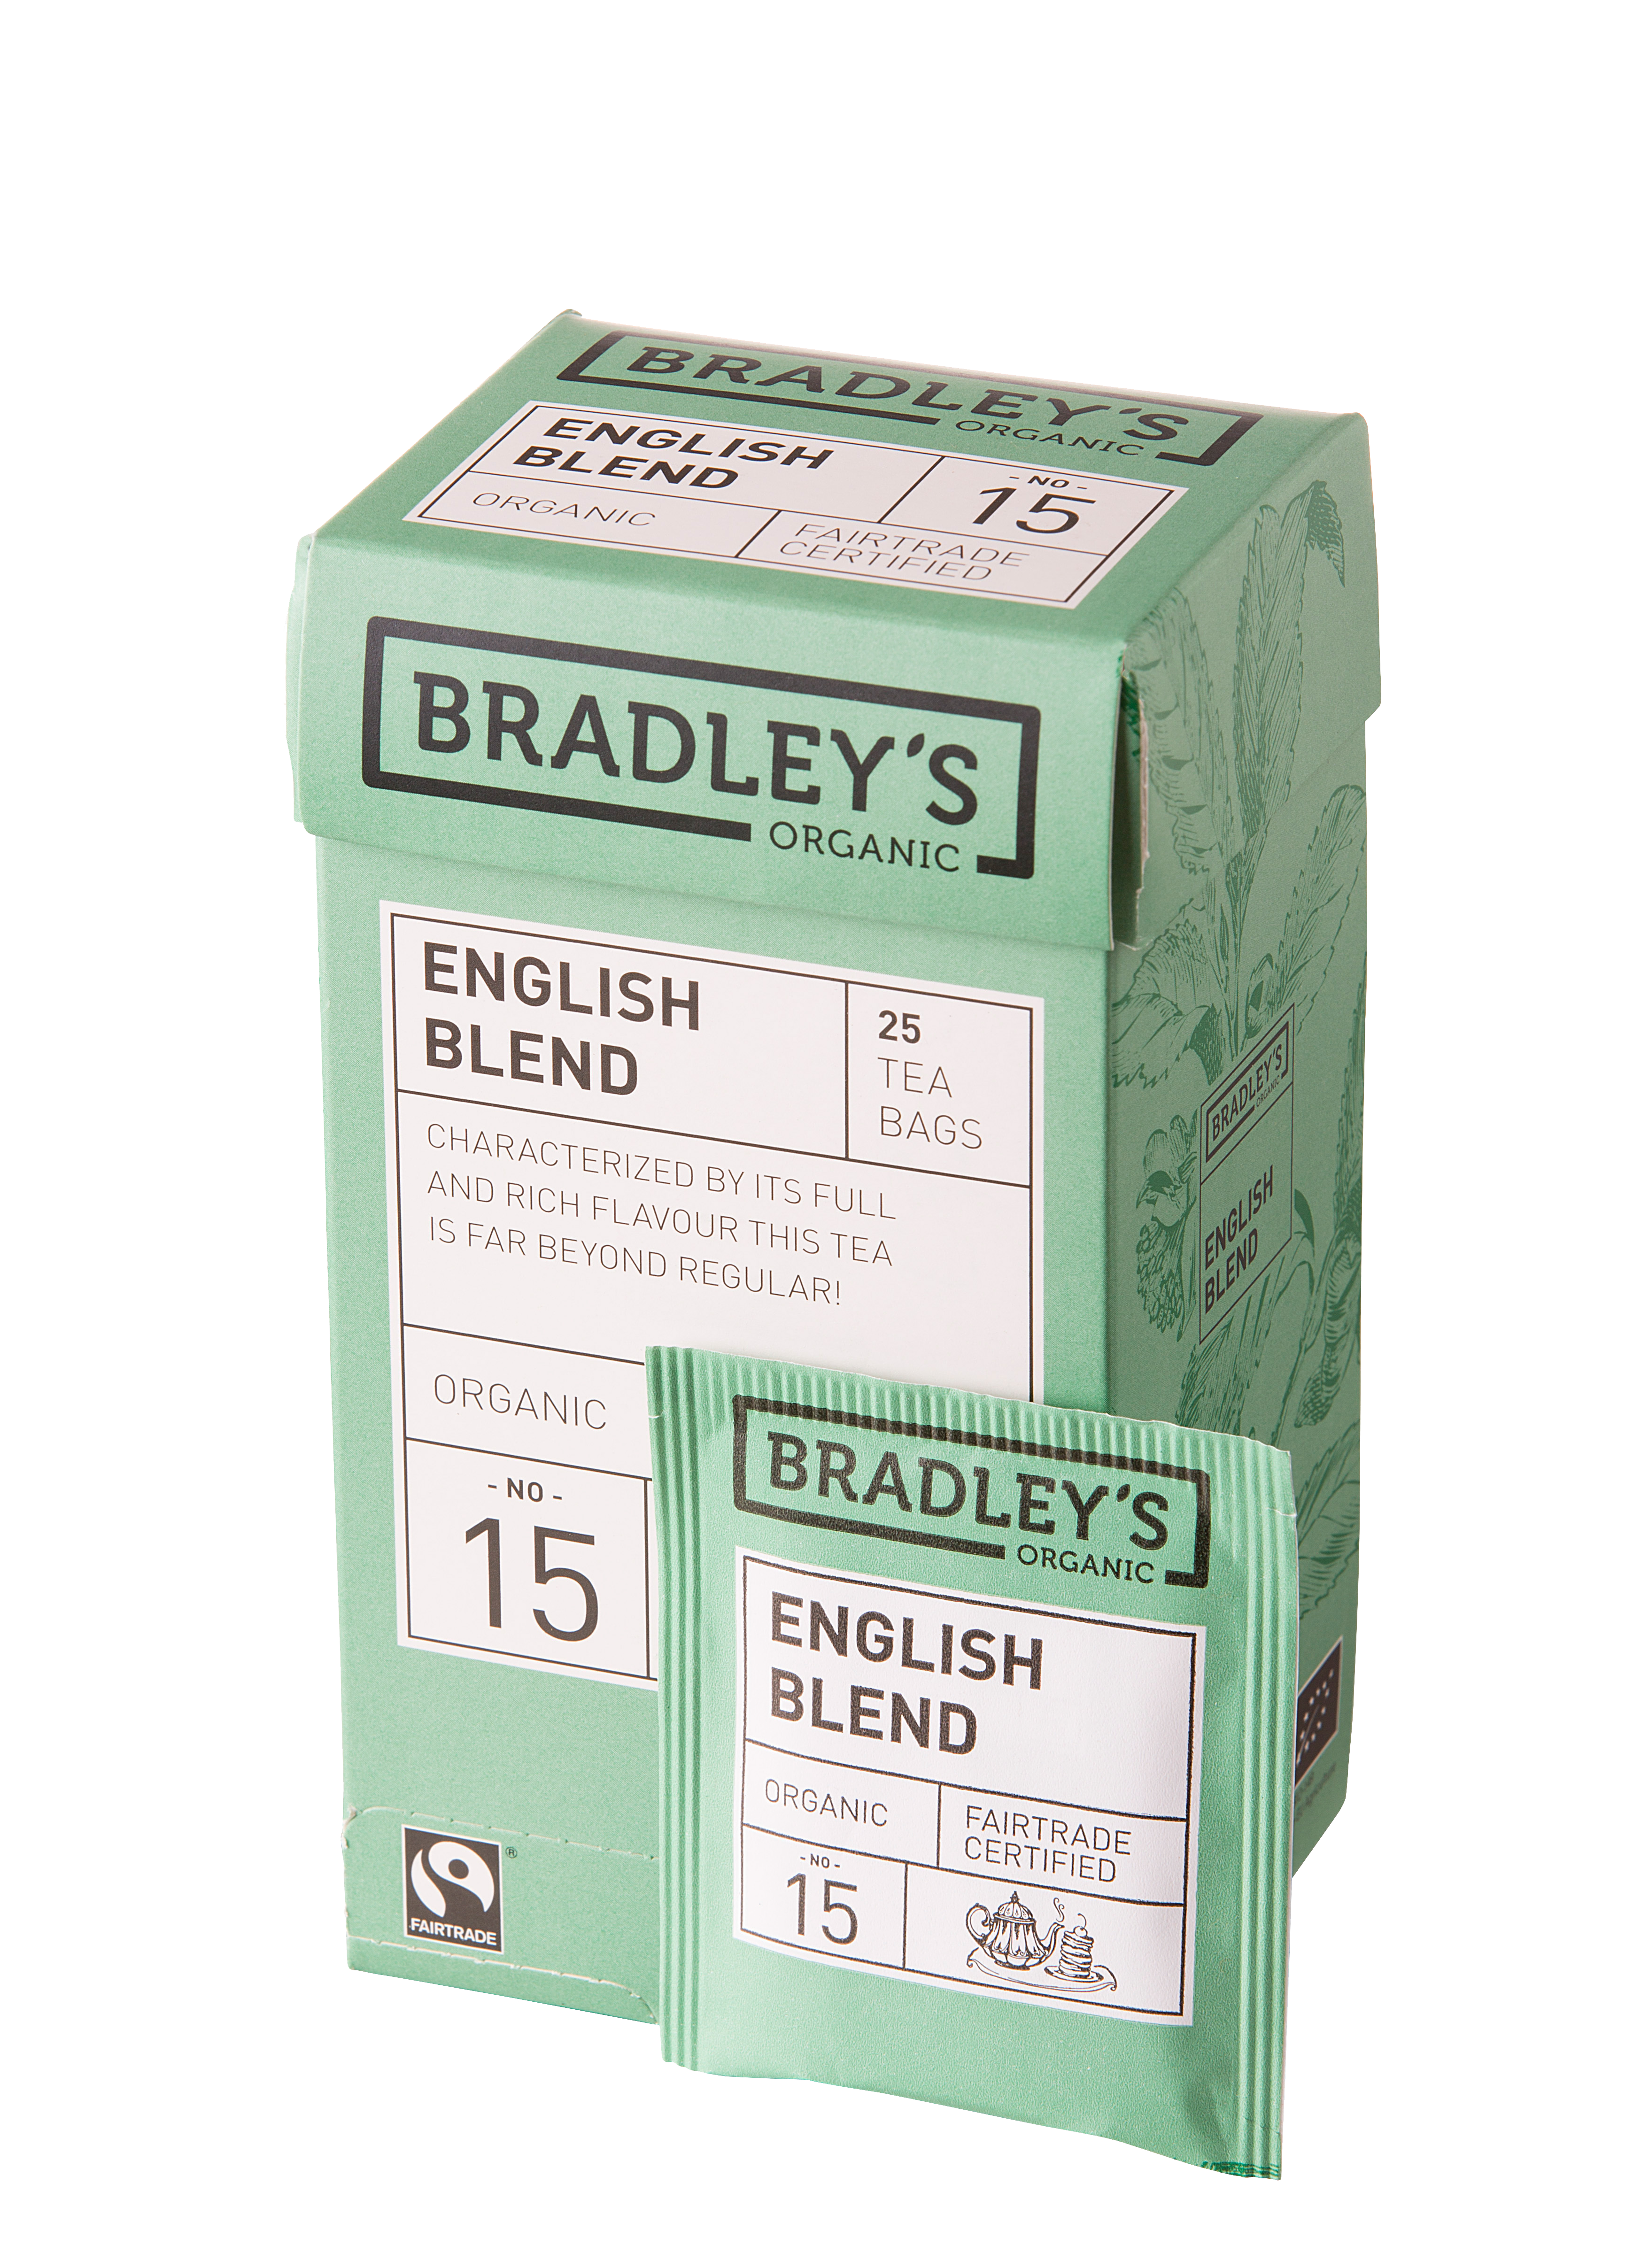 Bradley's thee